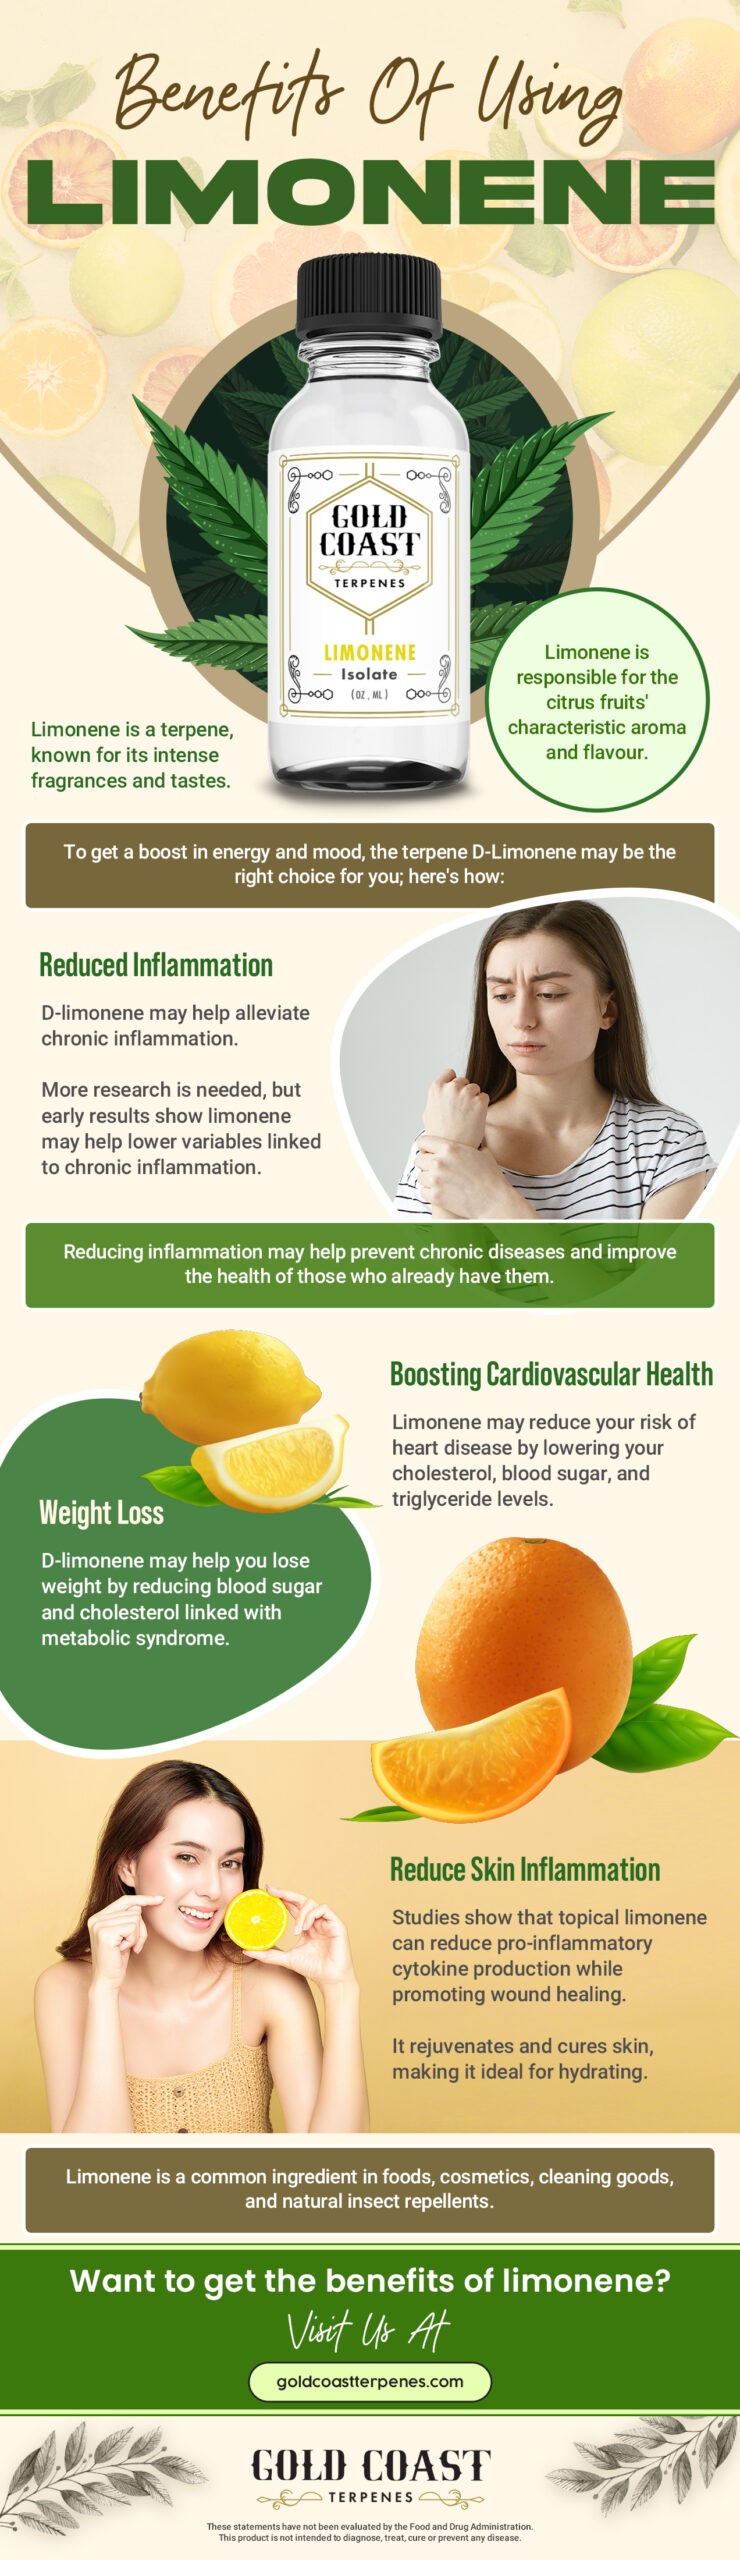 Benefits of Using Limonene